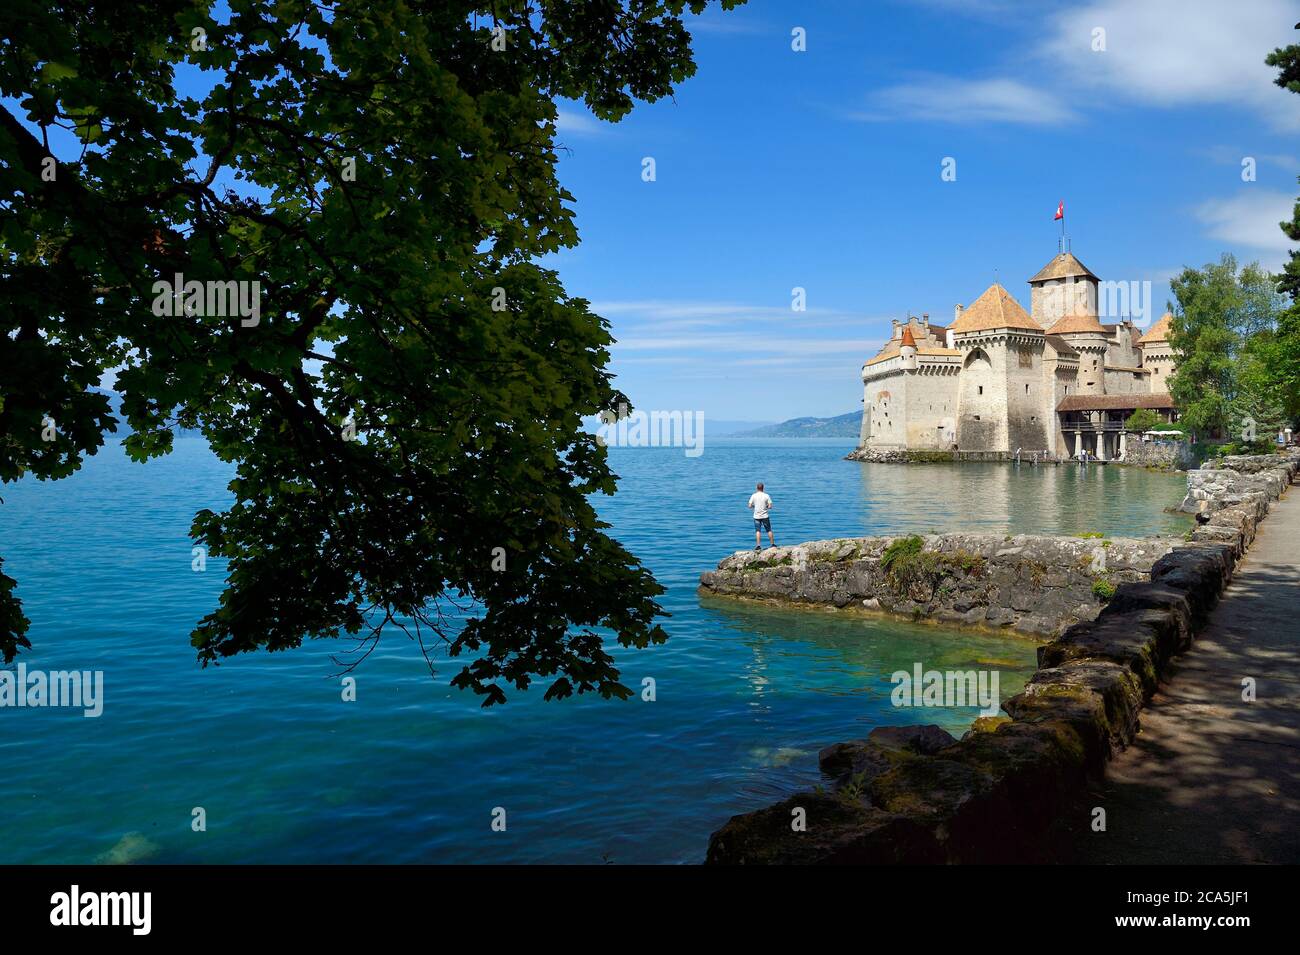 Switzerland, Canton of Vaud, Veytaux, Chillon castle on the shores of Lake Geneva (Lac Leman) Stock Photo